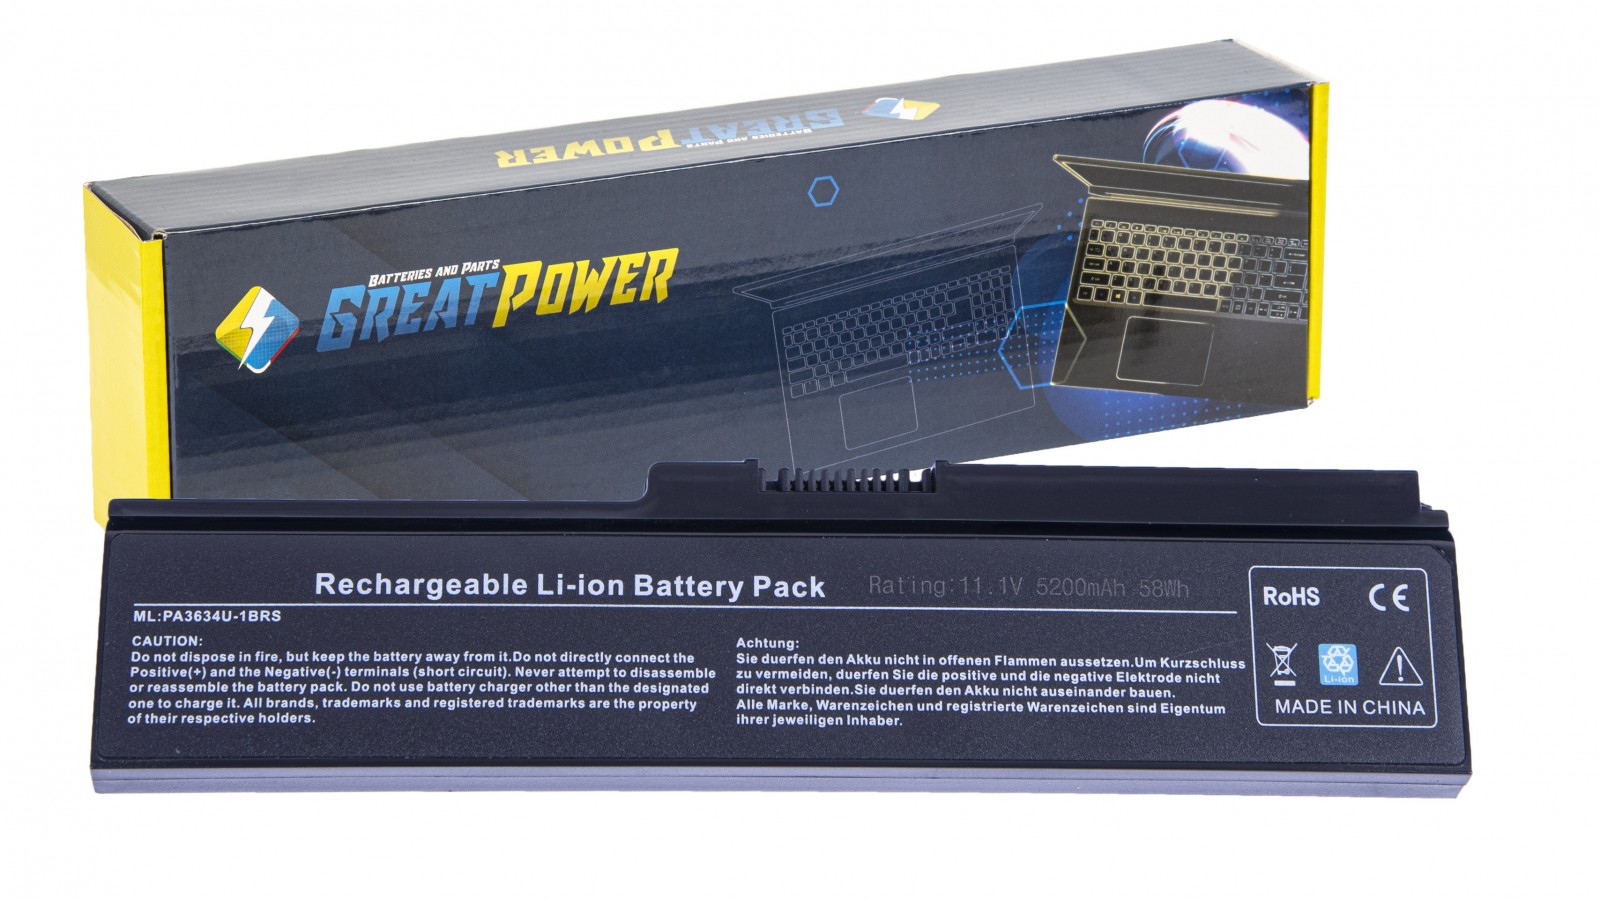 Batteria 5200mAh per Toshiba Portege M800 M801 M802 M803 M805 M806 M807 M808 M810 M820 M821 M822 M823 M825 serie